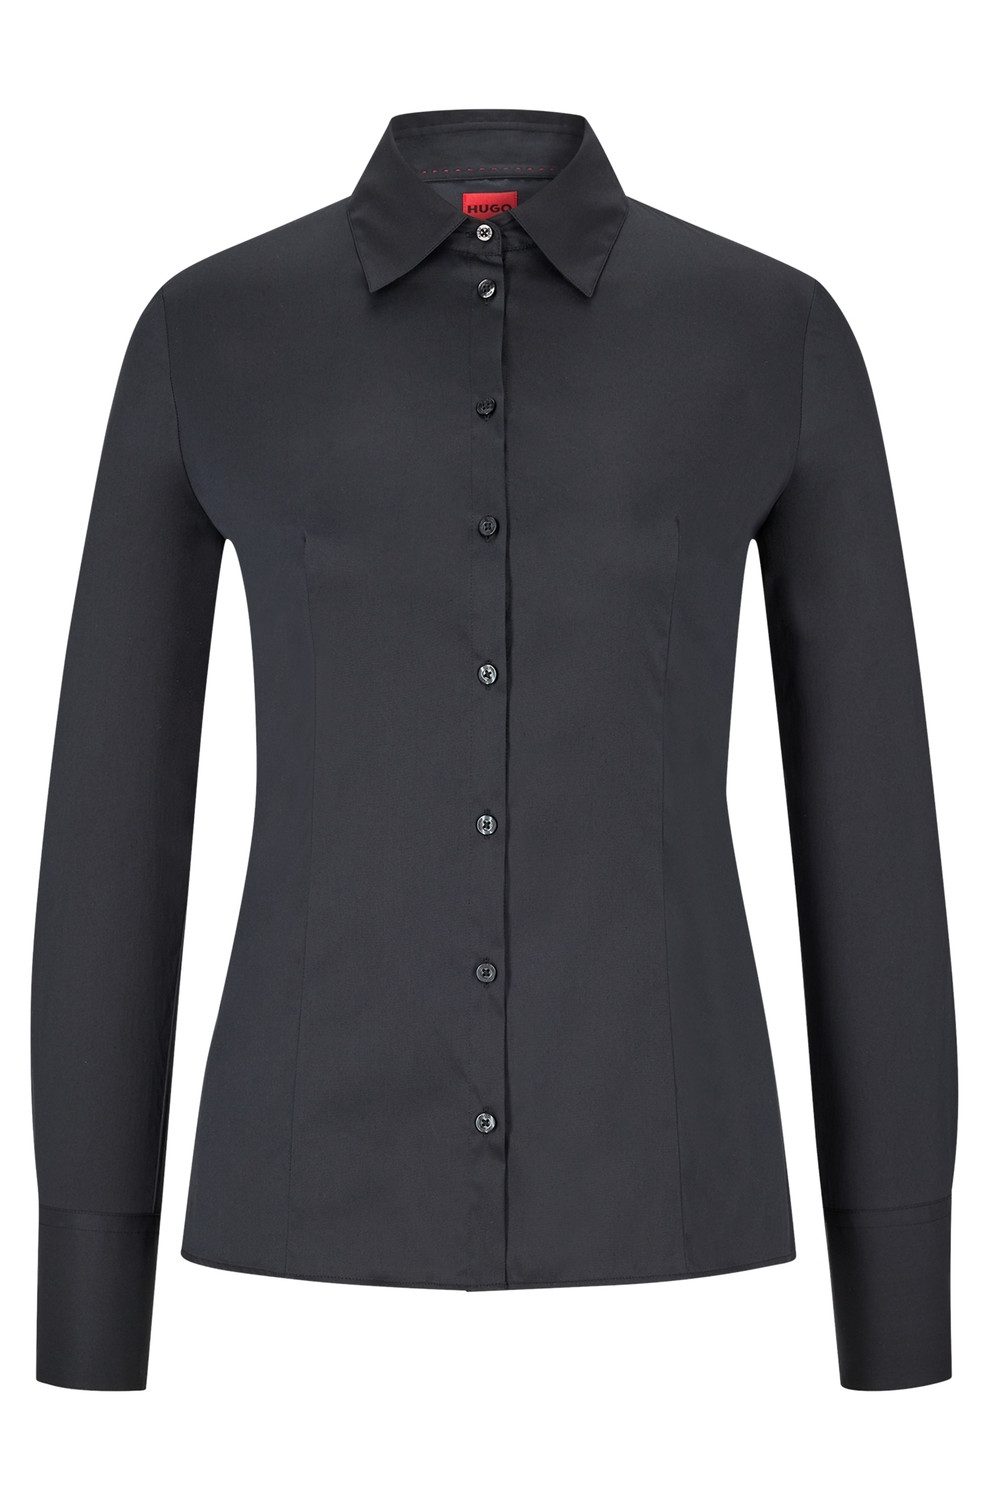 HUGO Blusenshirt The Fitted Shirt 10211515 01, Black